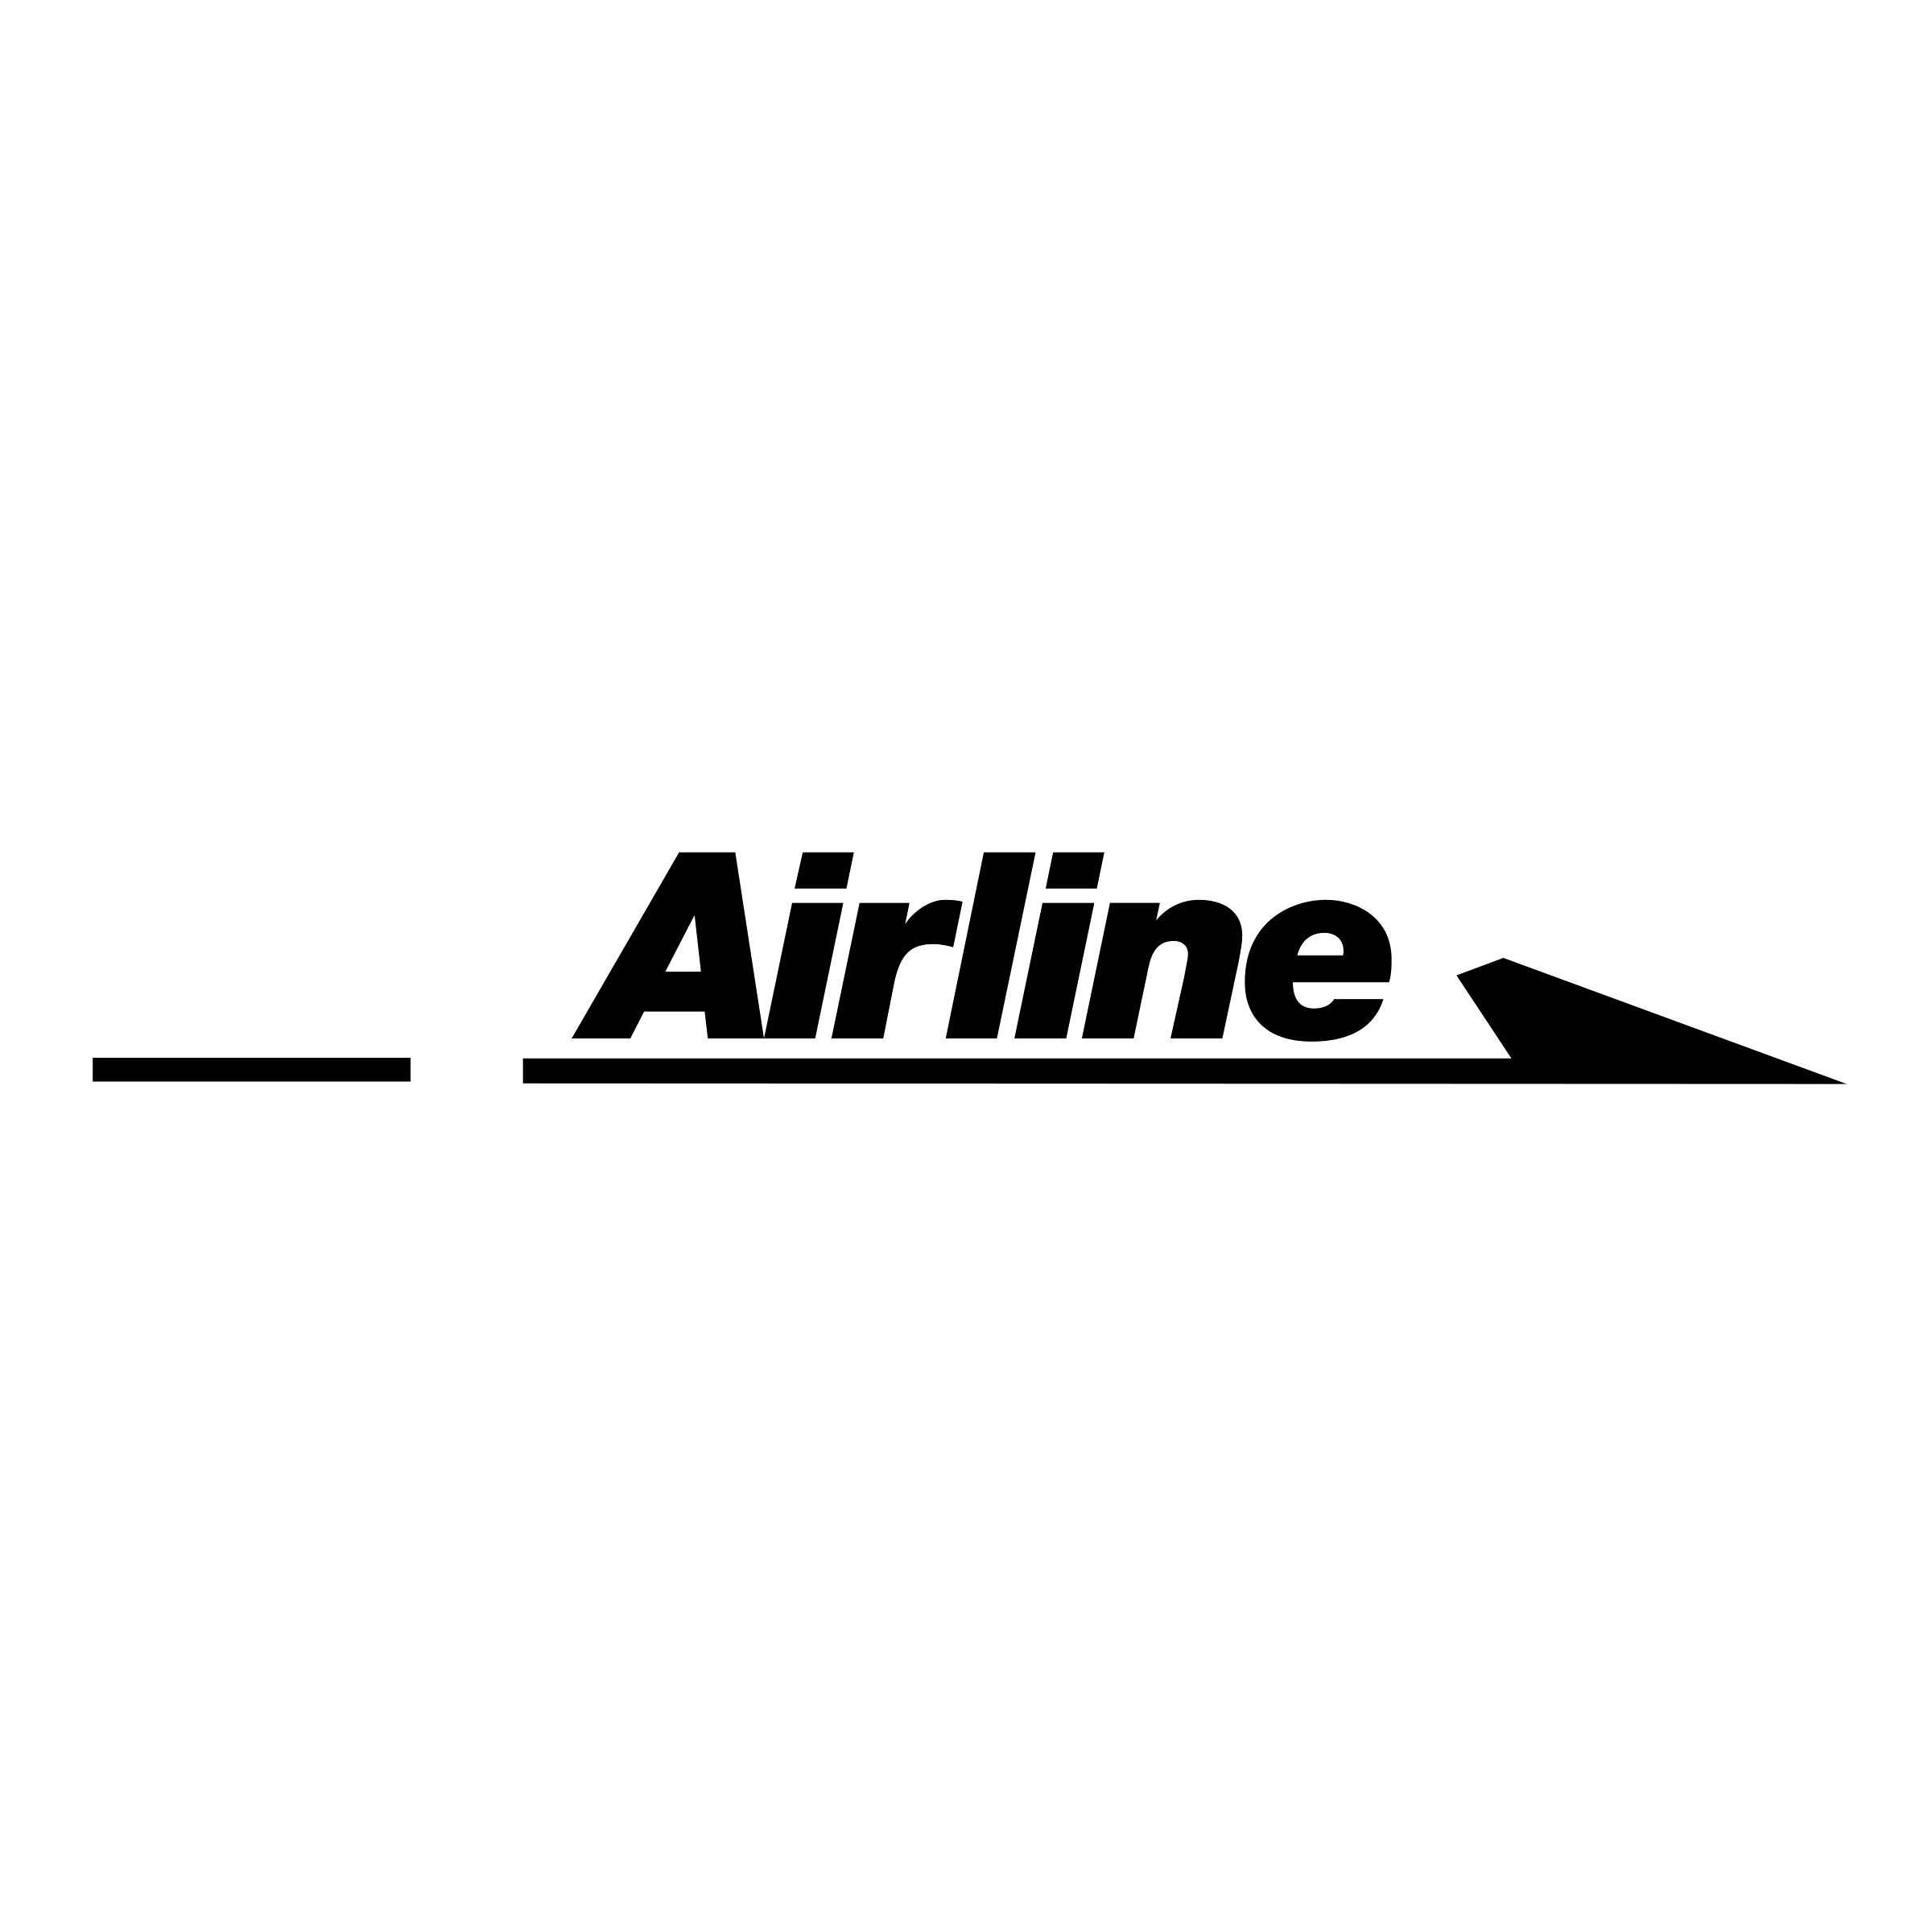 Black Airline Logo - City Airline Logo PNG Transparent & SVG Vector - Freebie Supply